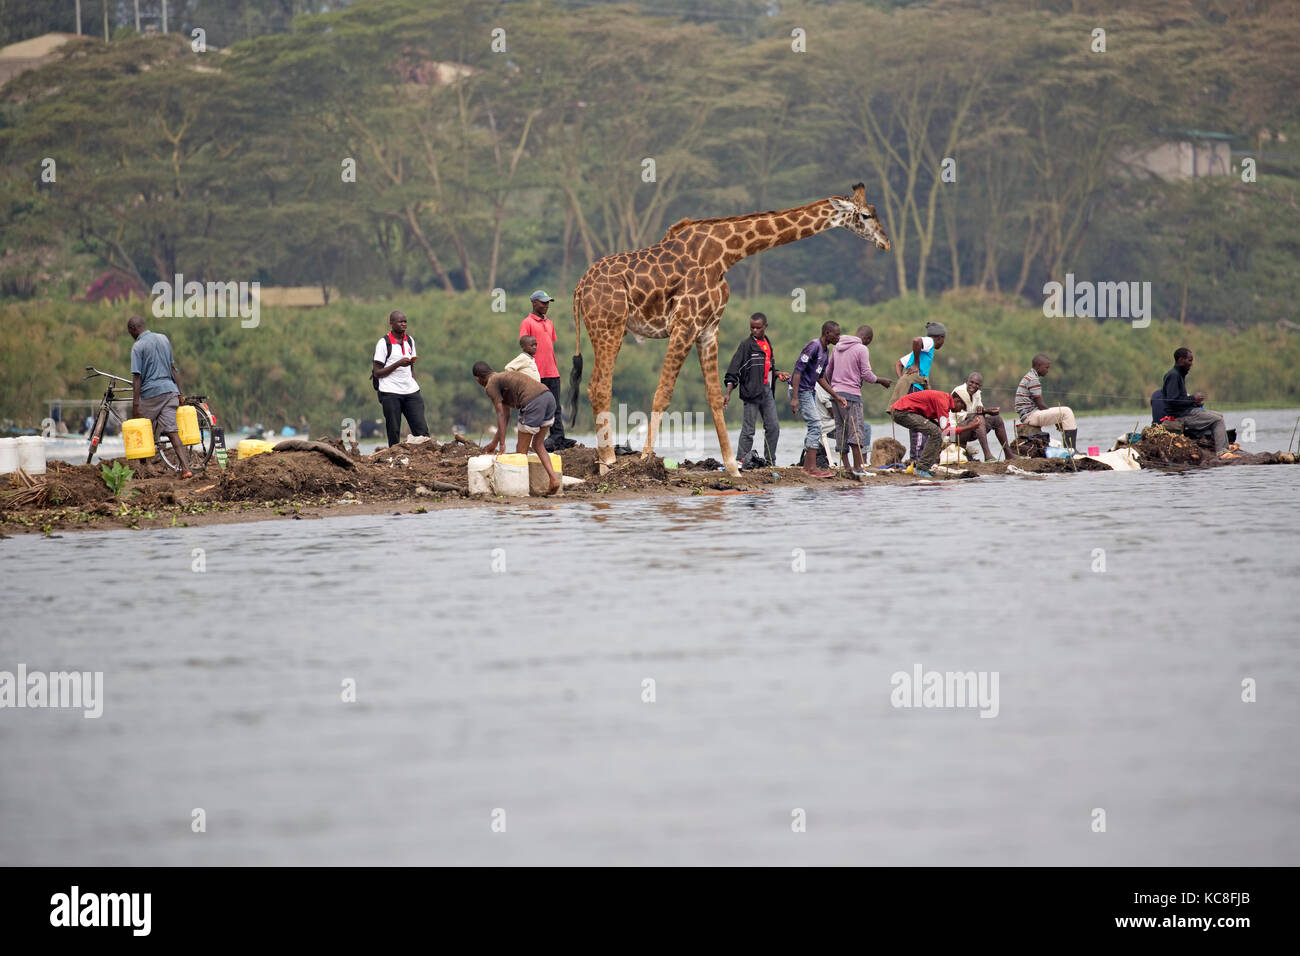 Eric the tame giraffe Giraffa camelopardalis amongst fishermen on shore Lake Naivasha Kenya Stock Photo